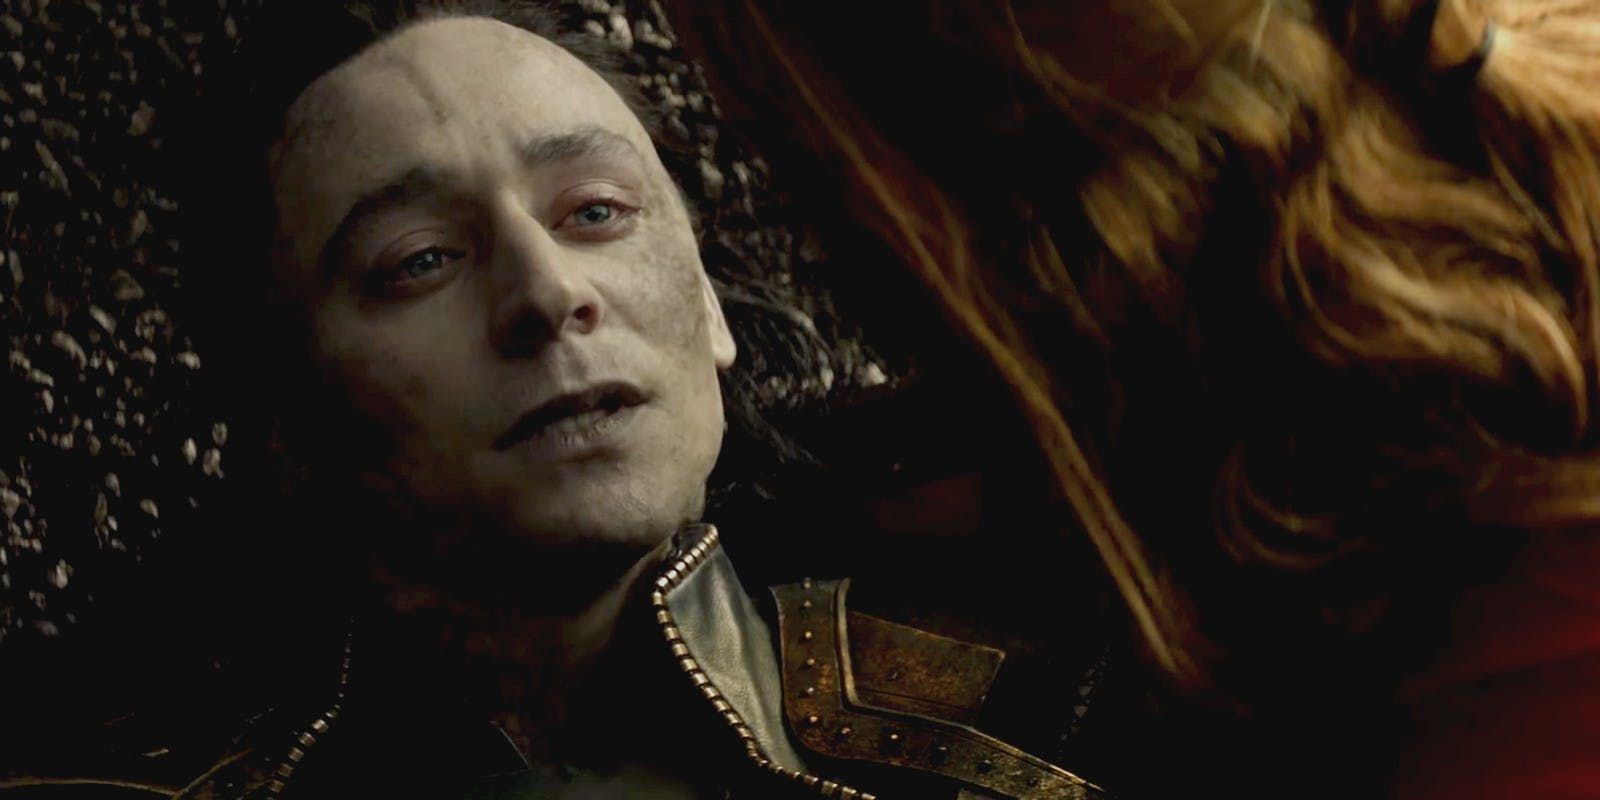 Loki in Thor The Dark World